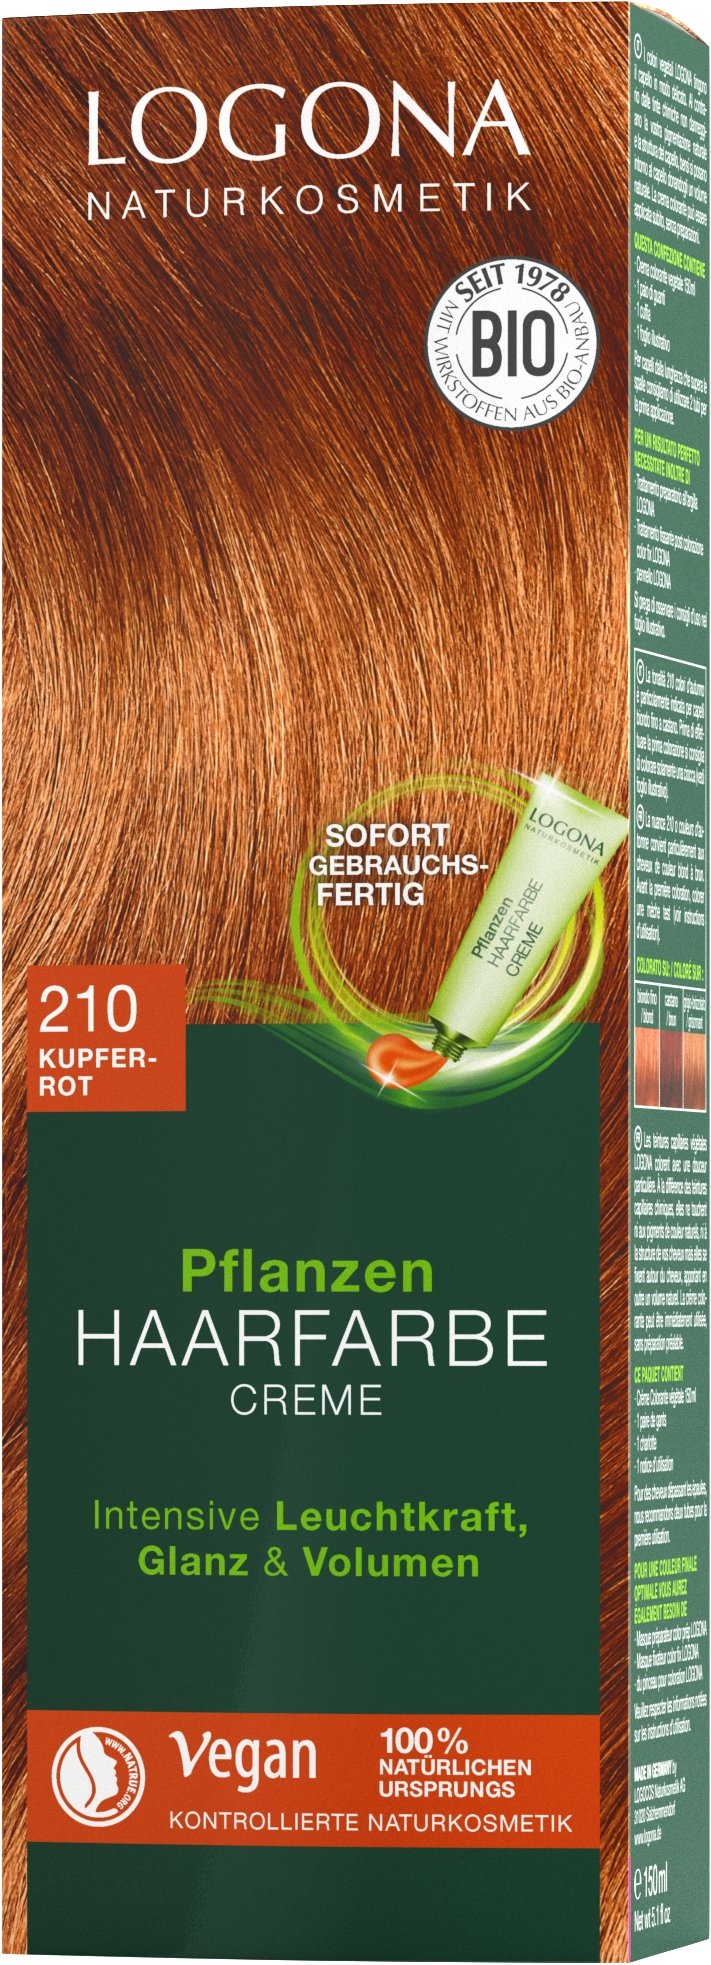 Pflanzen-Haarfarbe Creme 210 Kupferrot | | Logona Haarfarben